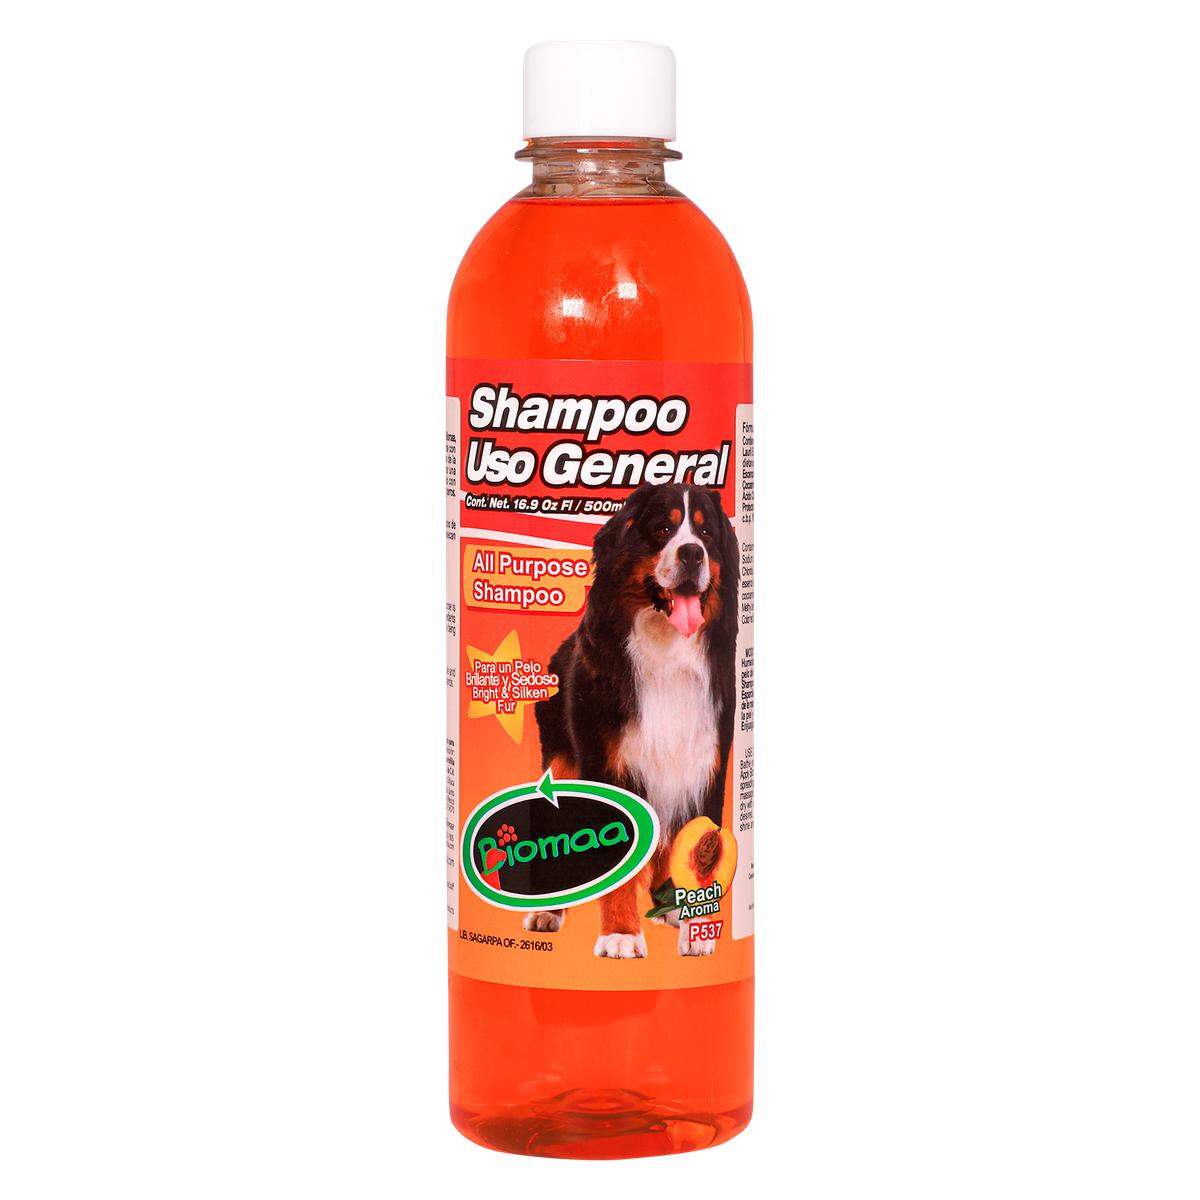 Shampoo de Uso General